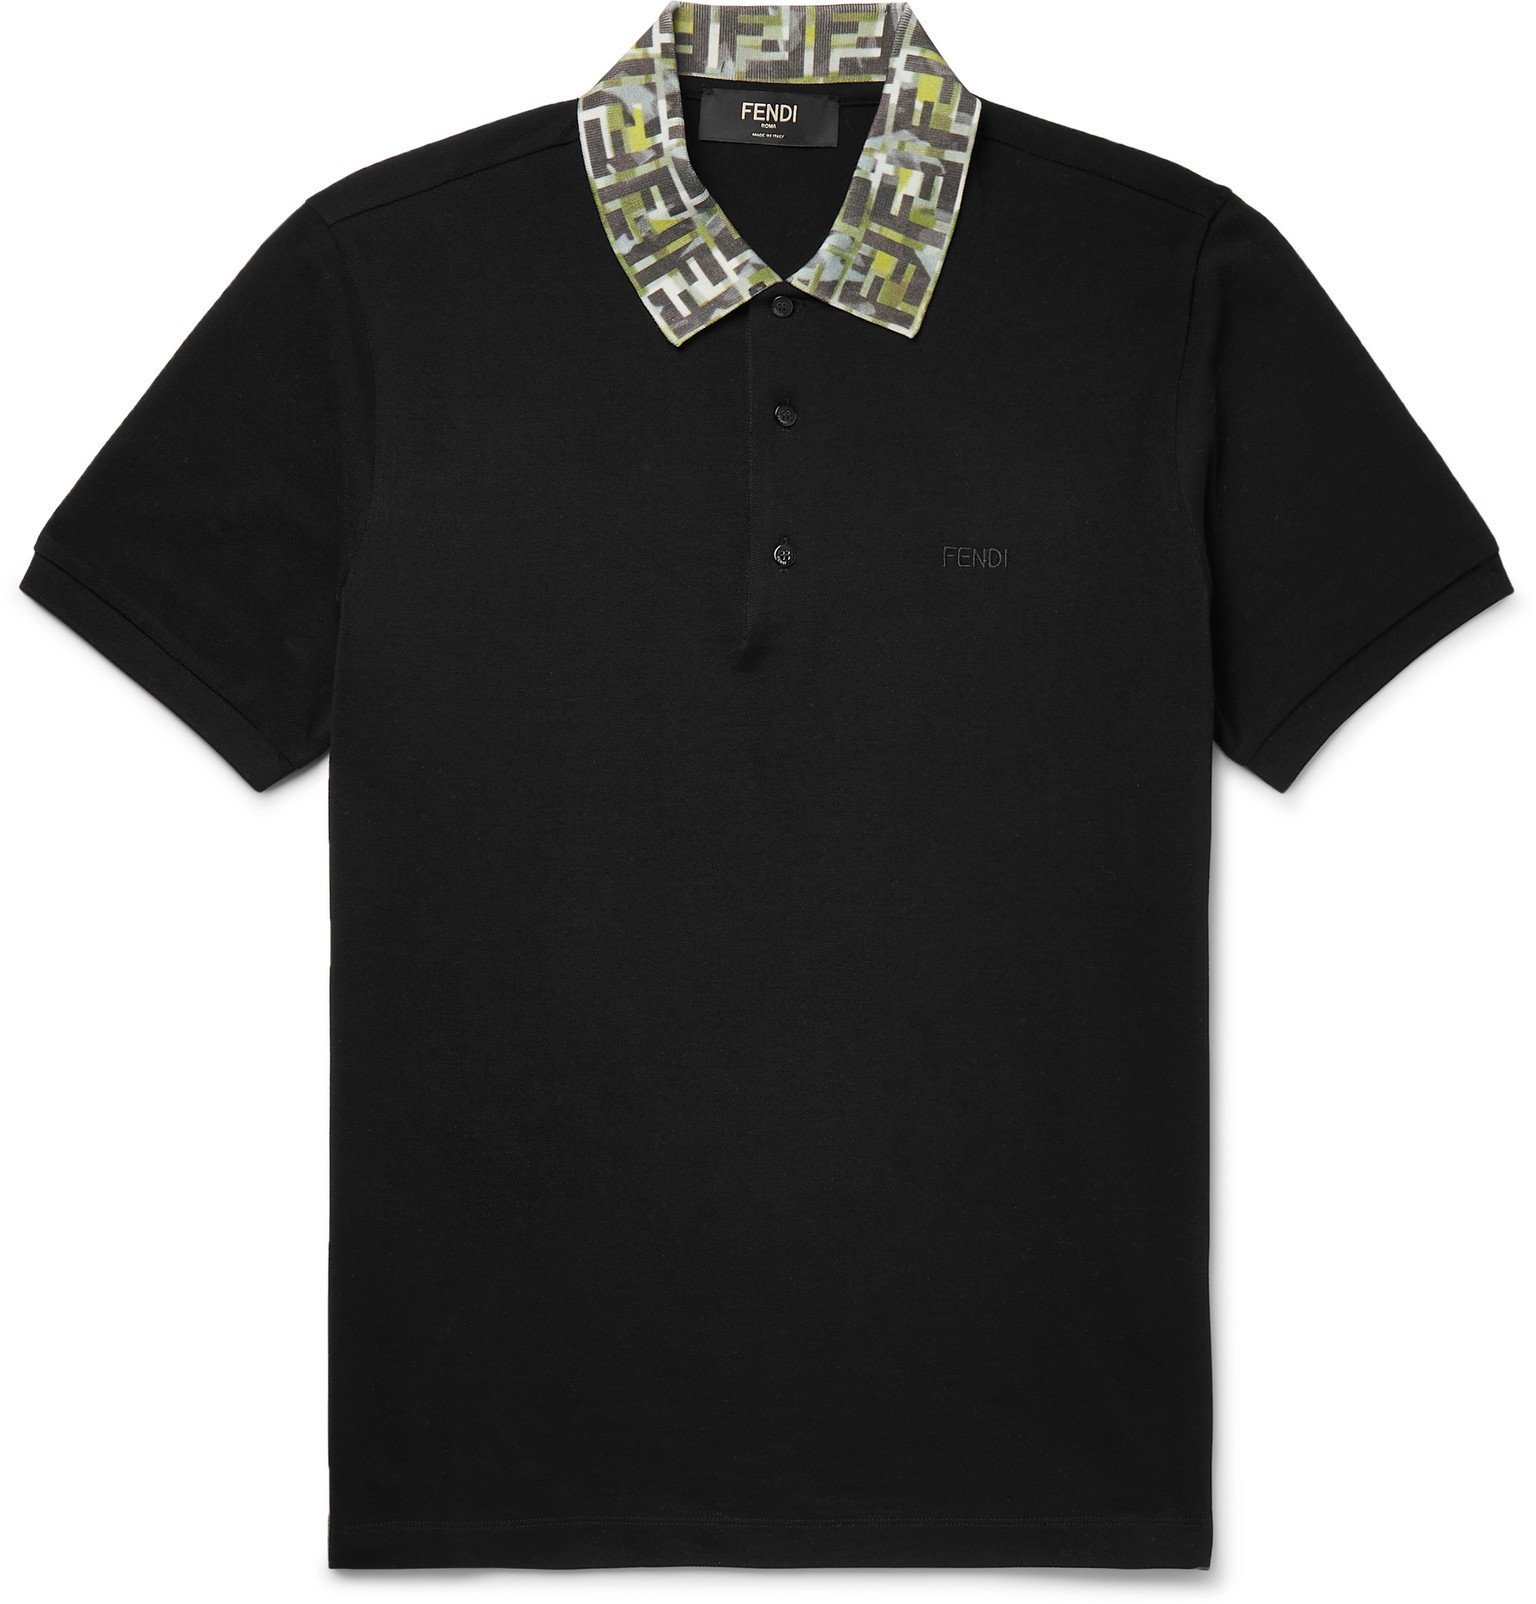 Fendi - Logo-Trimmed Cotton-Piqué Polo Shirt - Black Fendi